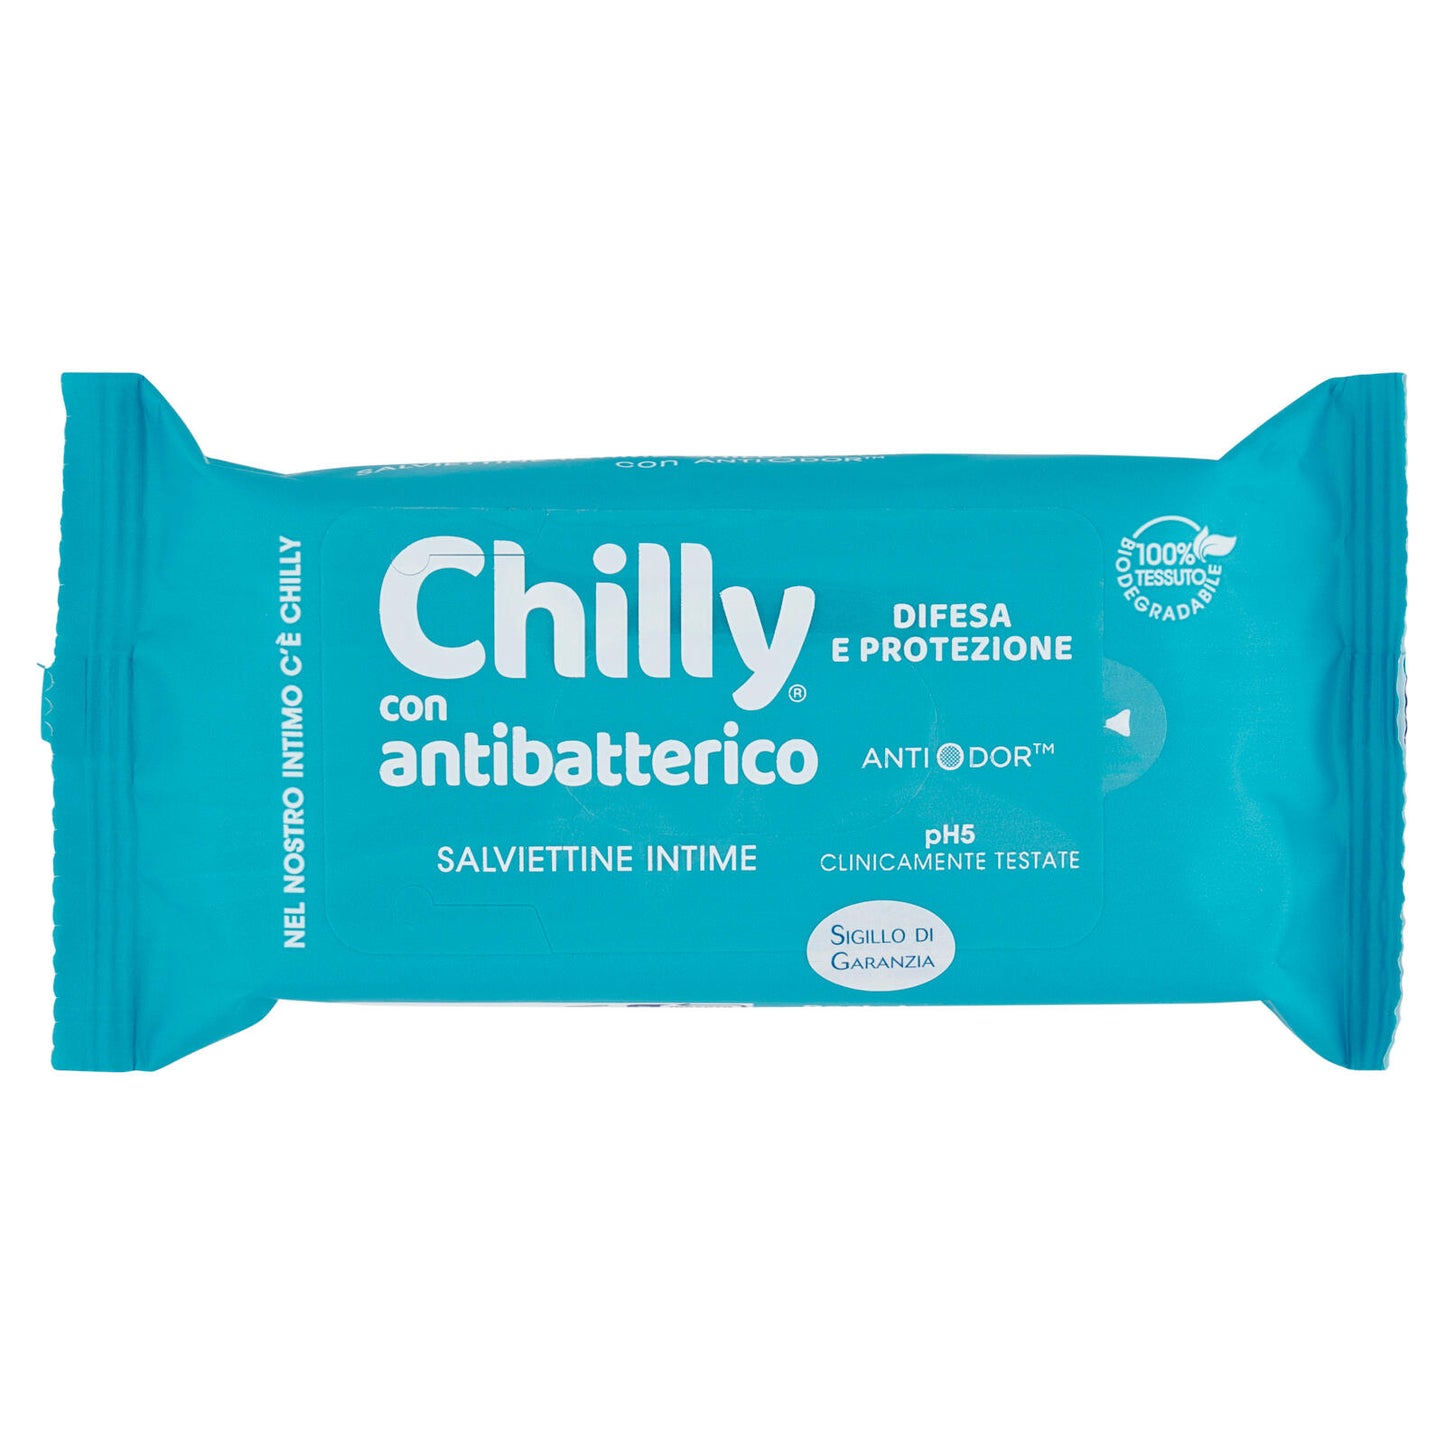 Chilly con antibatterico Salviettine Intime 12 pz